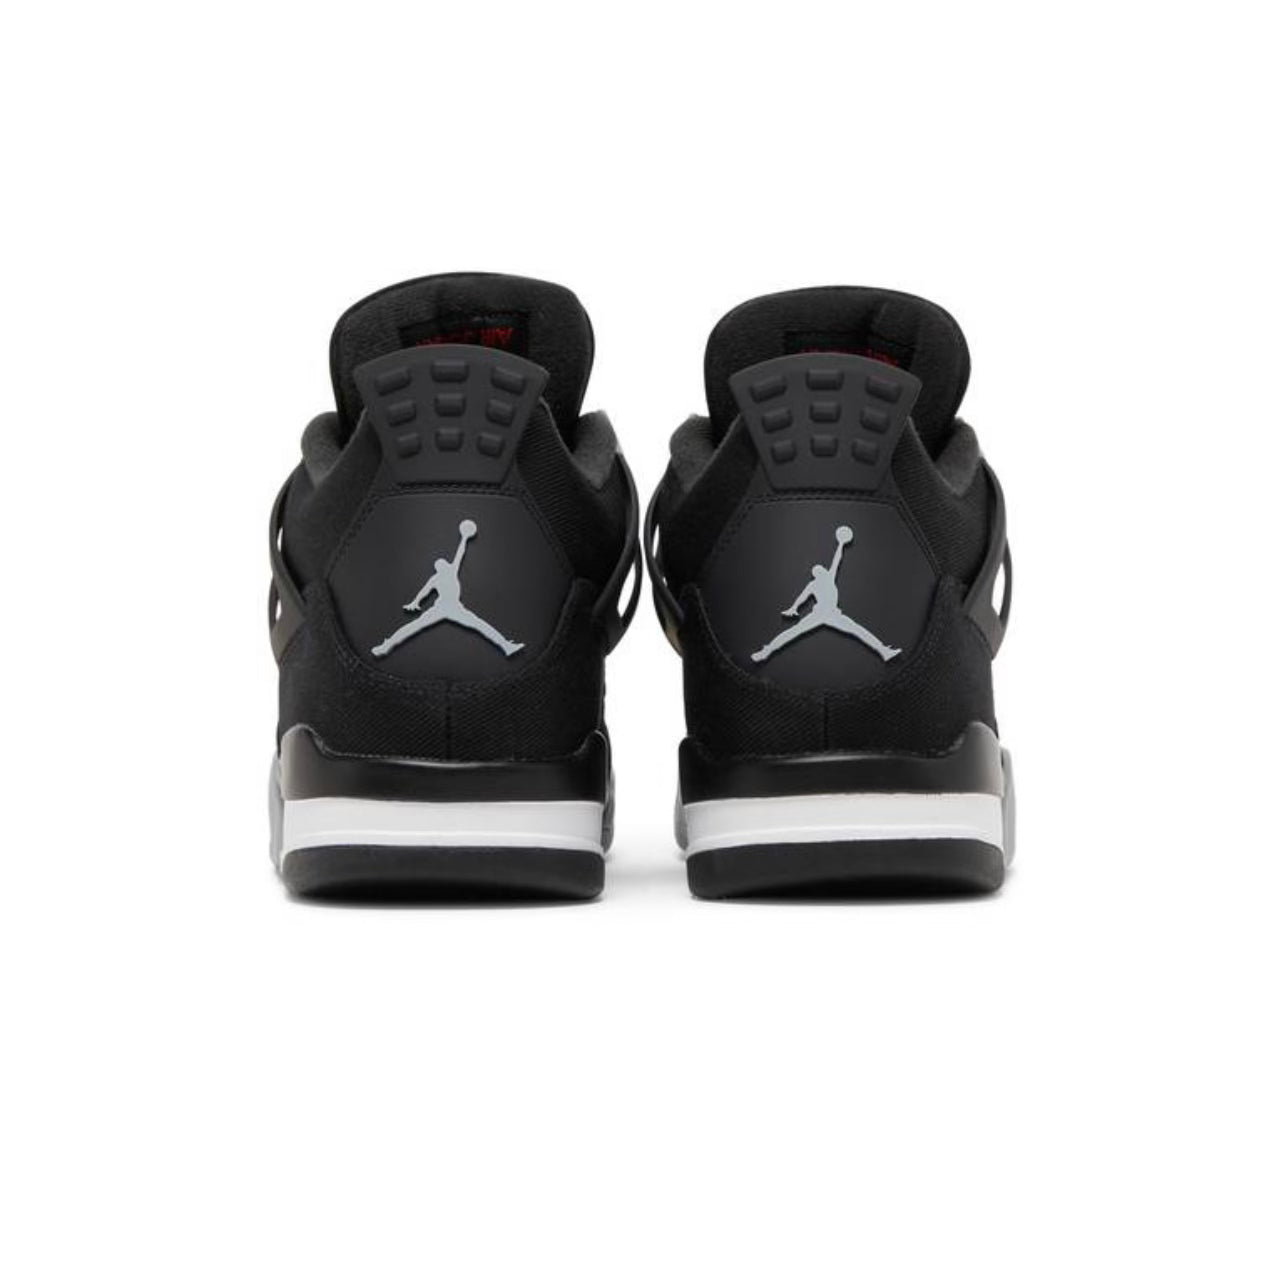 Air Jordan Retro 4 "Black Canvas"